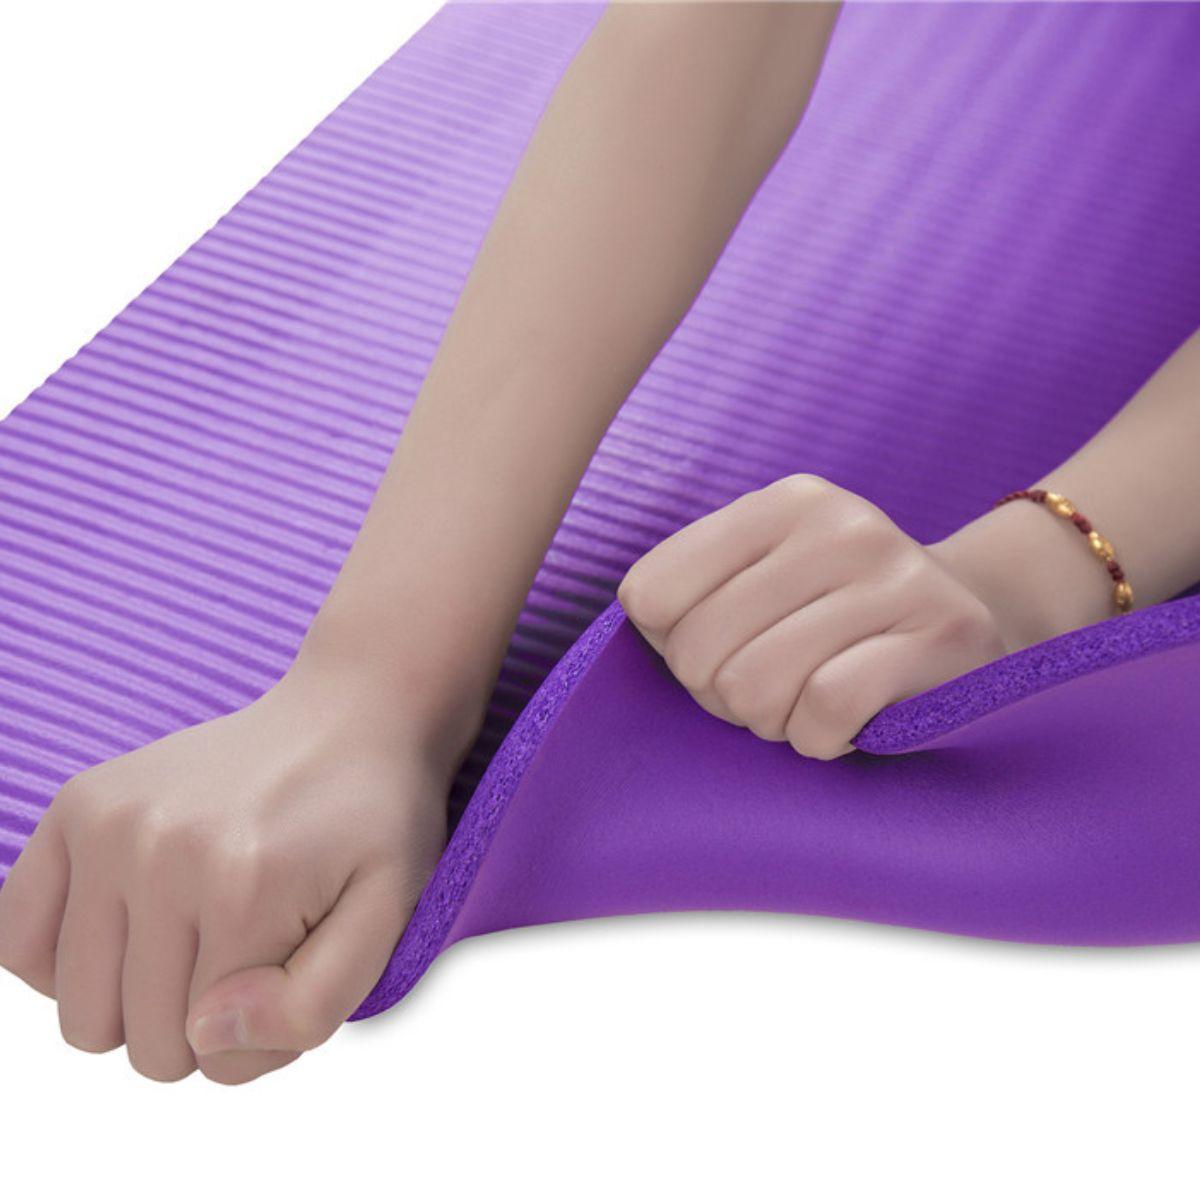 NBR Yoga Mat 15mm - tcistarhealthproducts